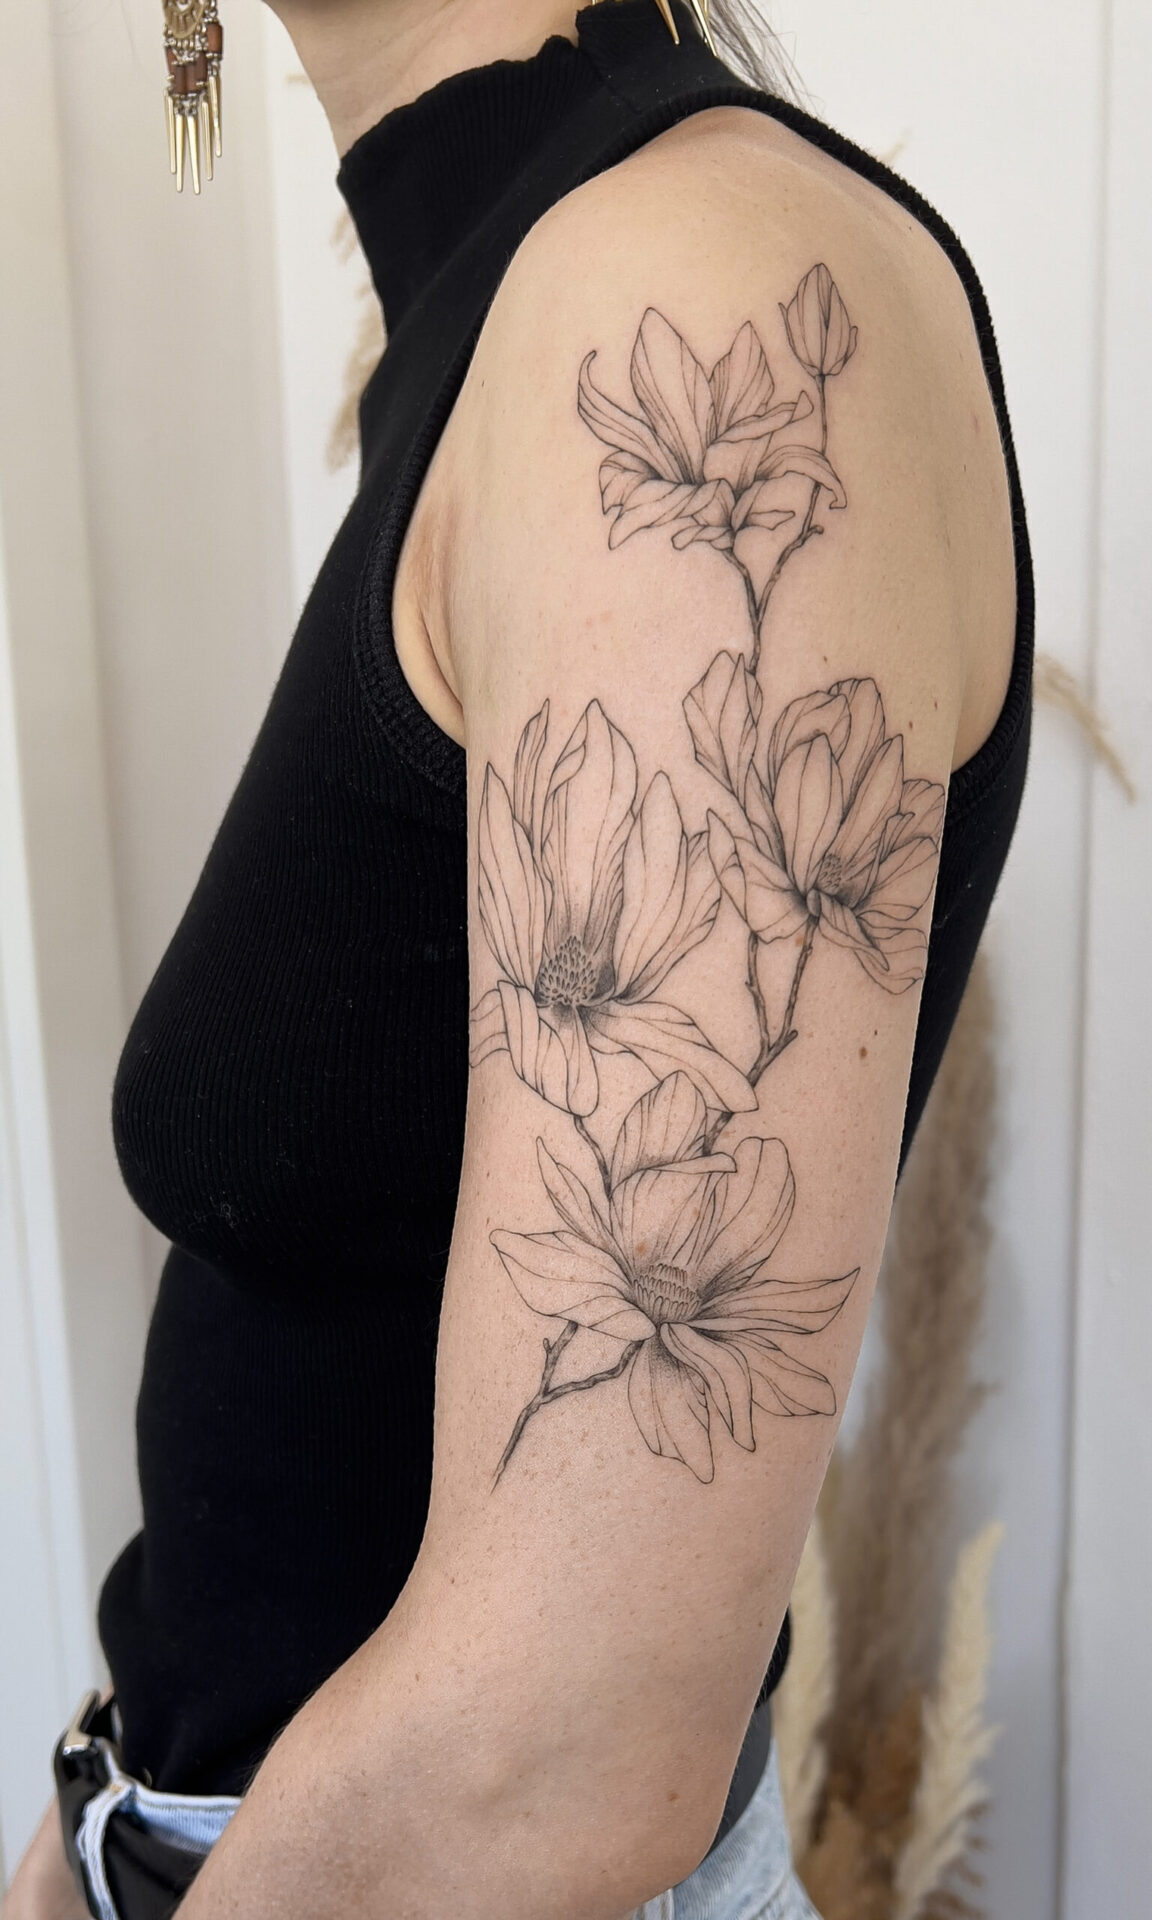 upper arm fineline flower tattoo with magnolia from smasli ink an female tattoo artist working in salzburg austria